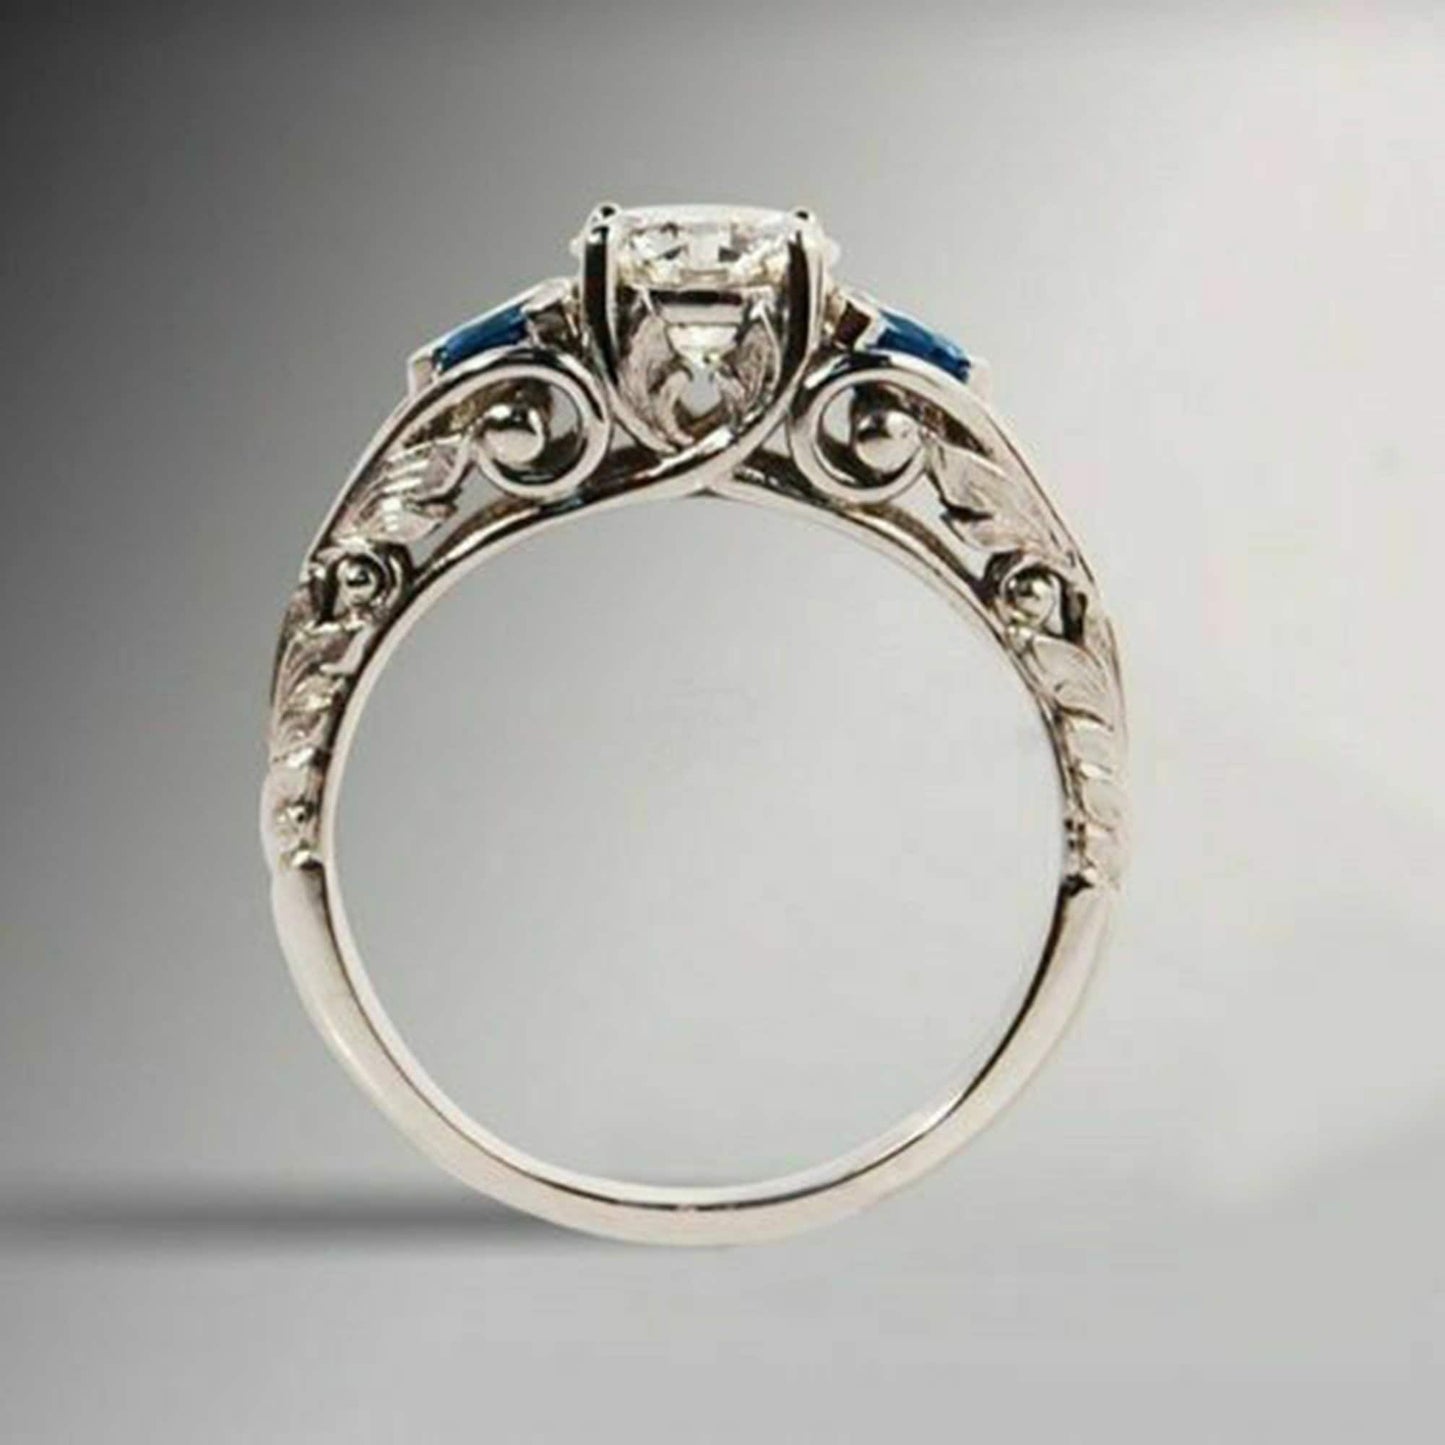 Filigree Art Deco Sapphire Ring/Three Stone Engagement Ring/White Round & Blue Trillion Cut Diamond Woman's Ring/14K Gold Wedding Ring